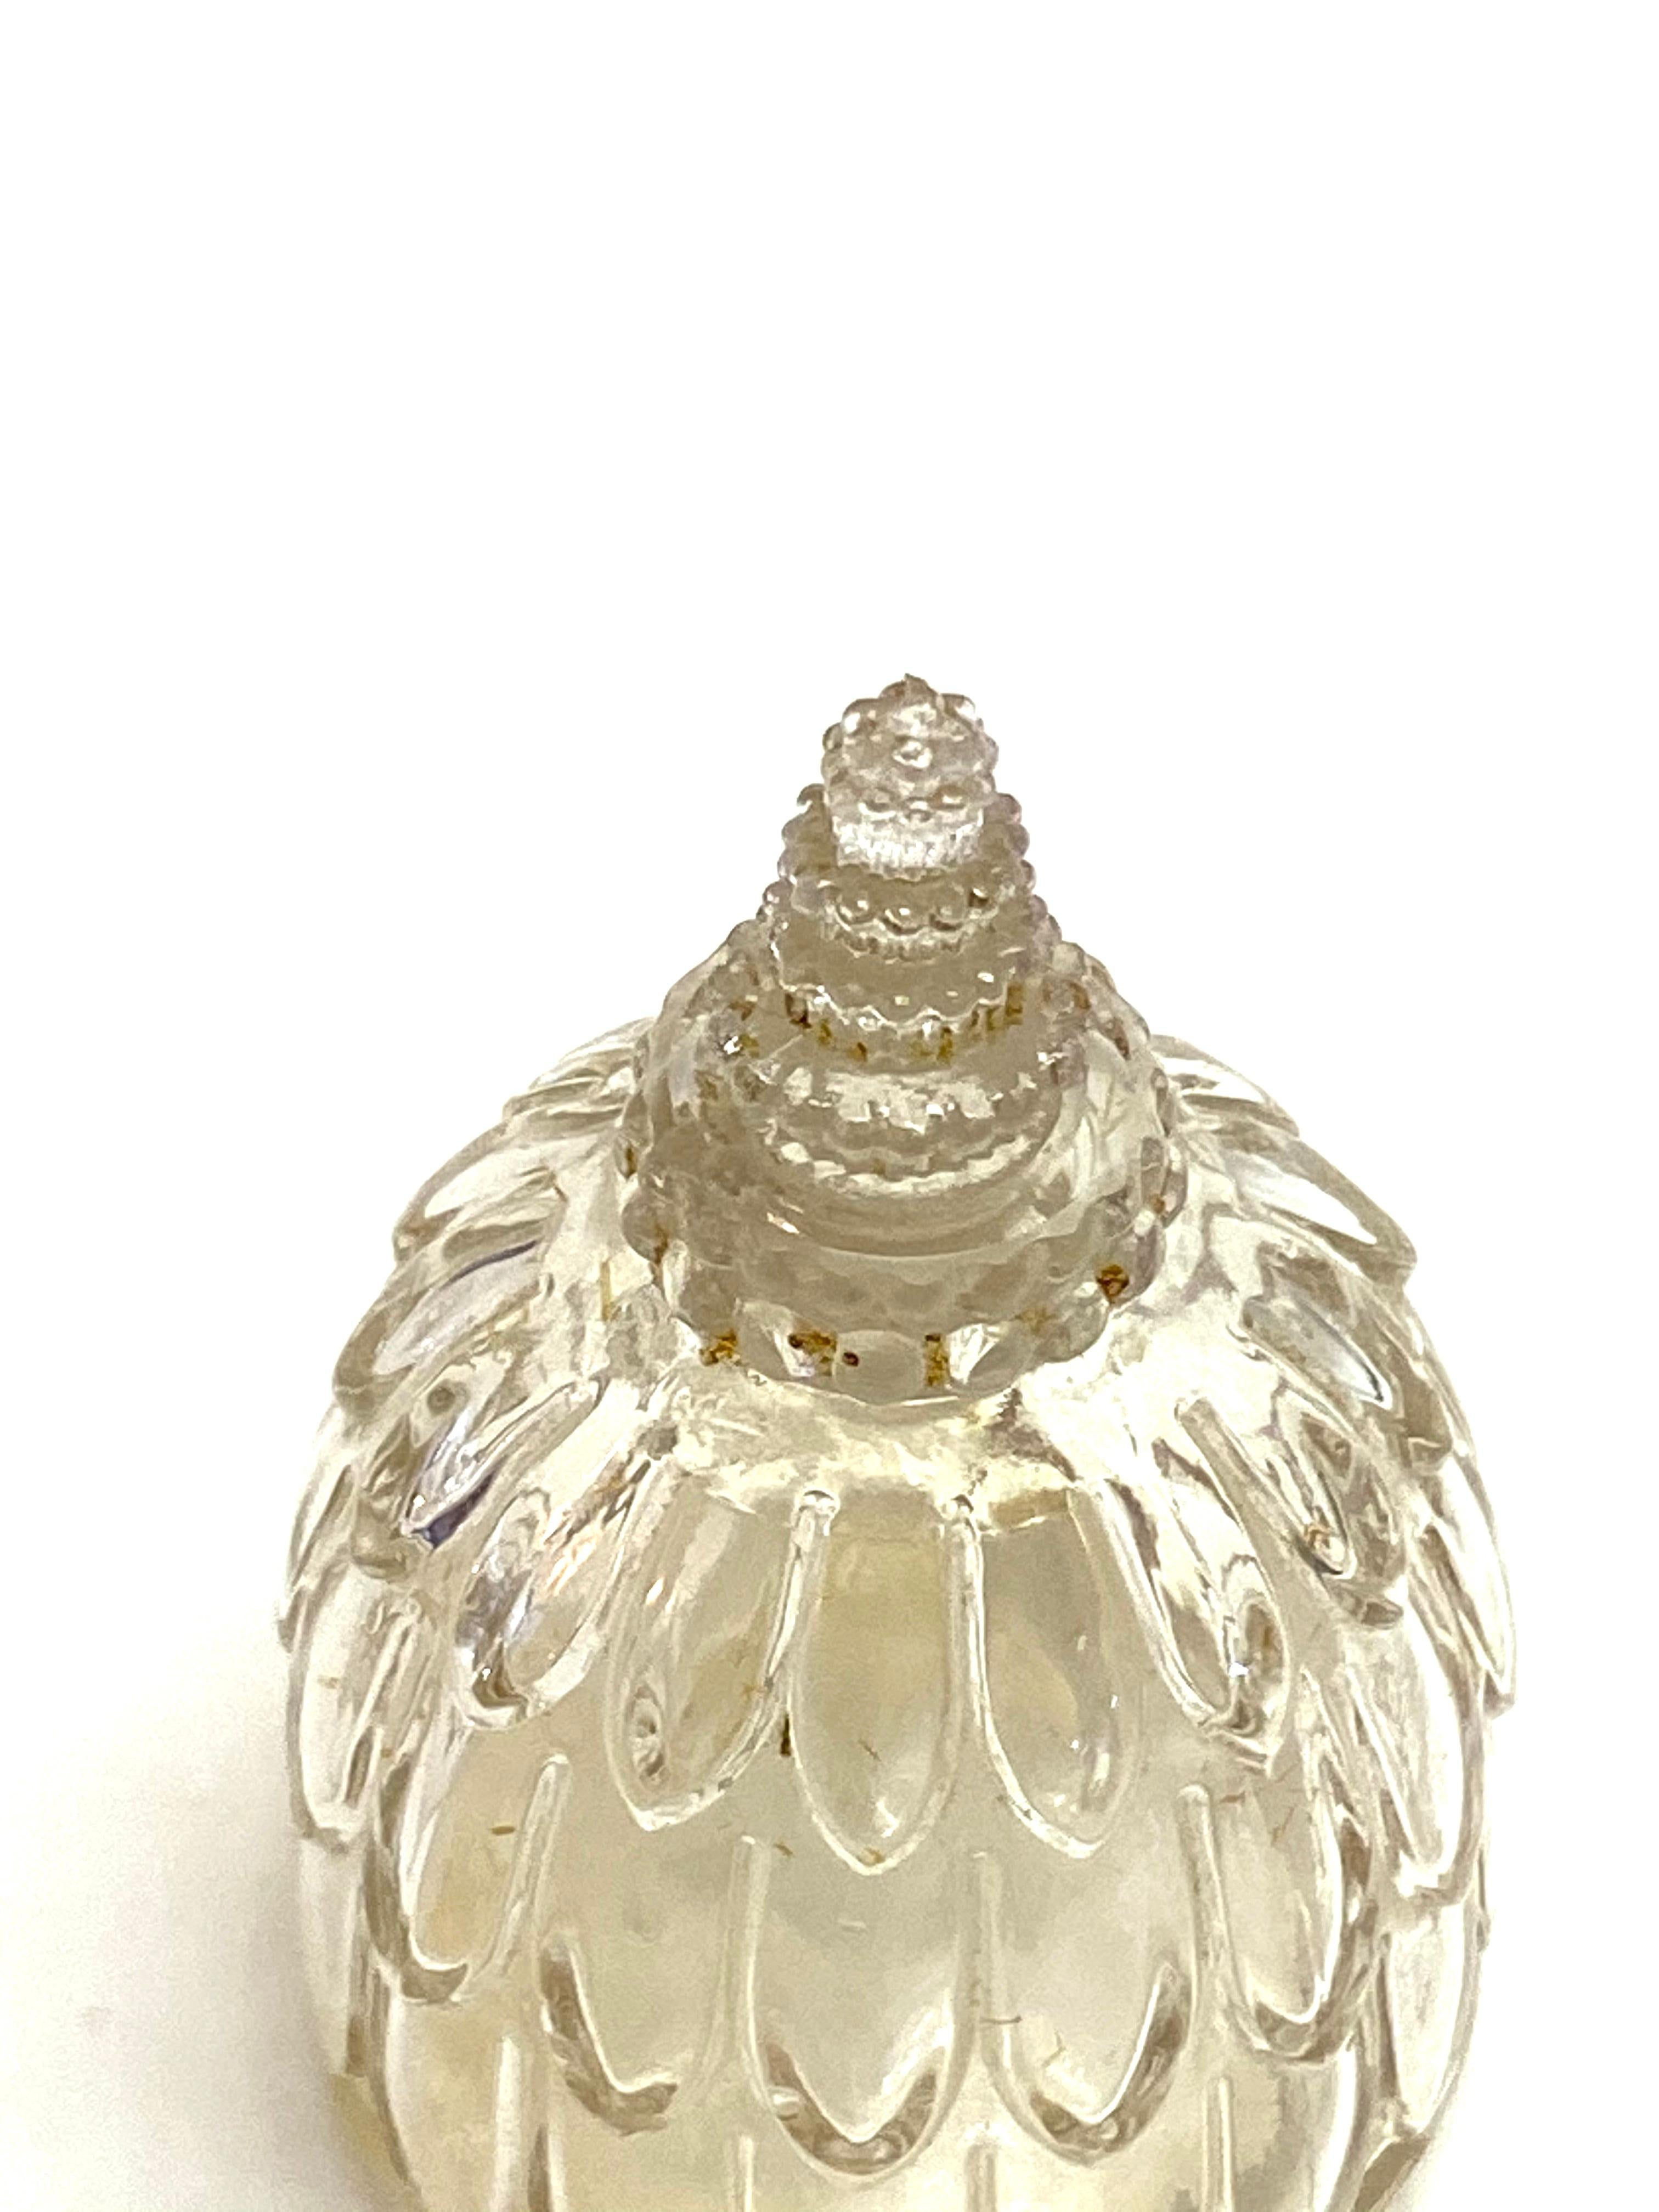 Molded 1929 René Lalique Narcisse Perfume Bottle for Forvil Clear Glass